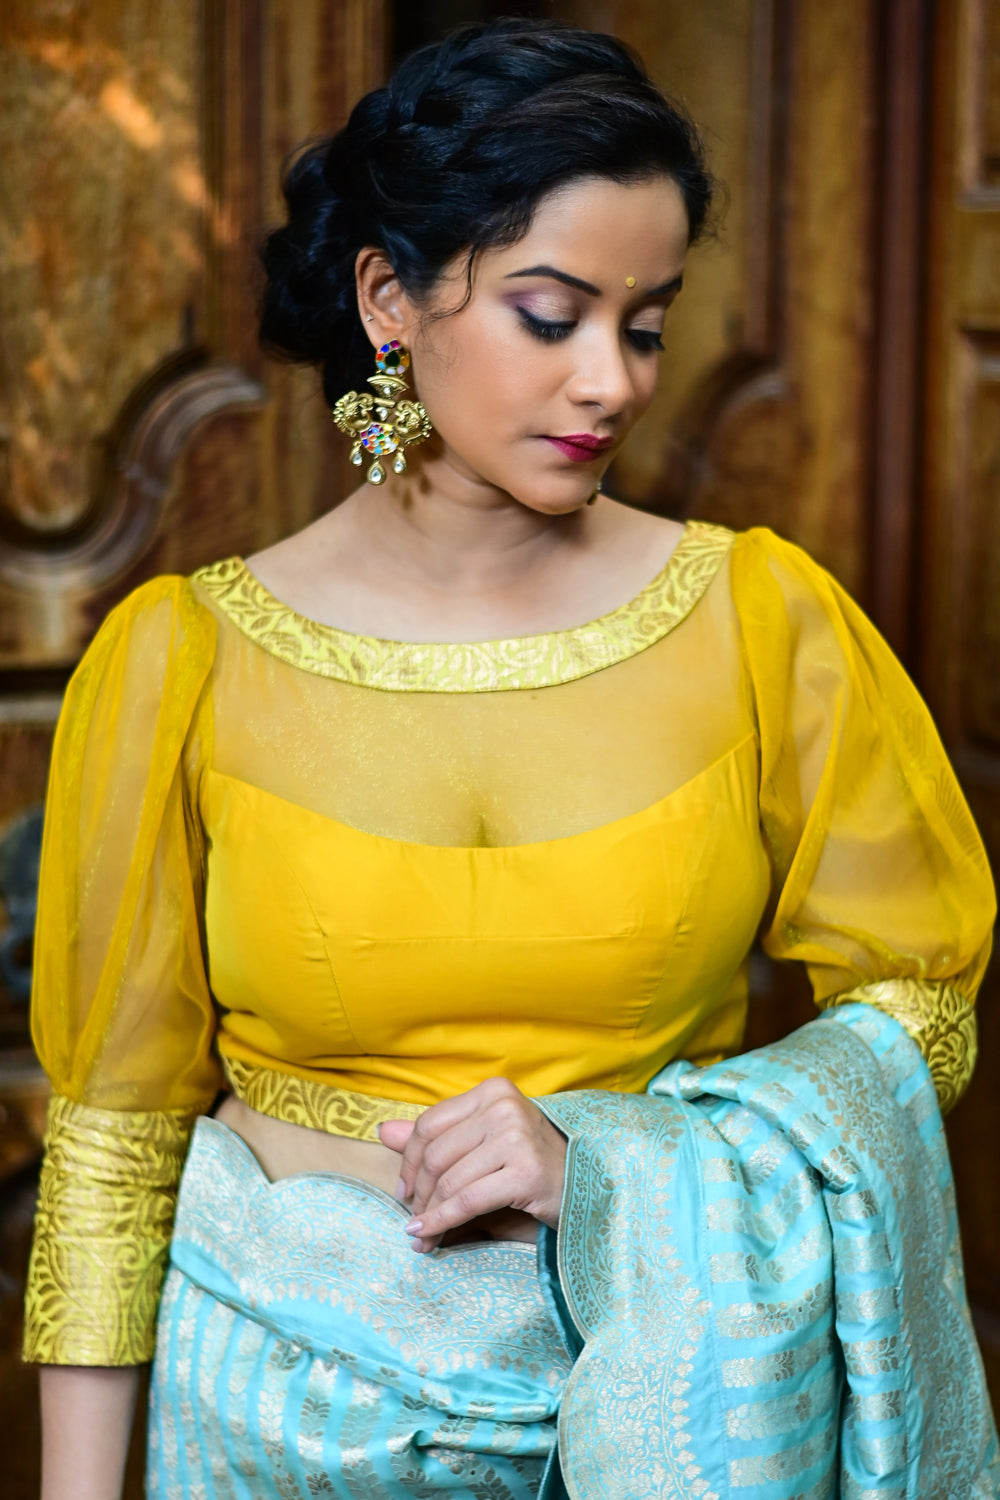 Yellowish mustard silk boat neck blouse with sheer yoke